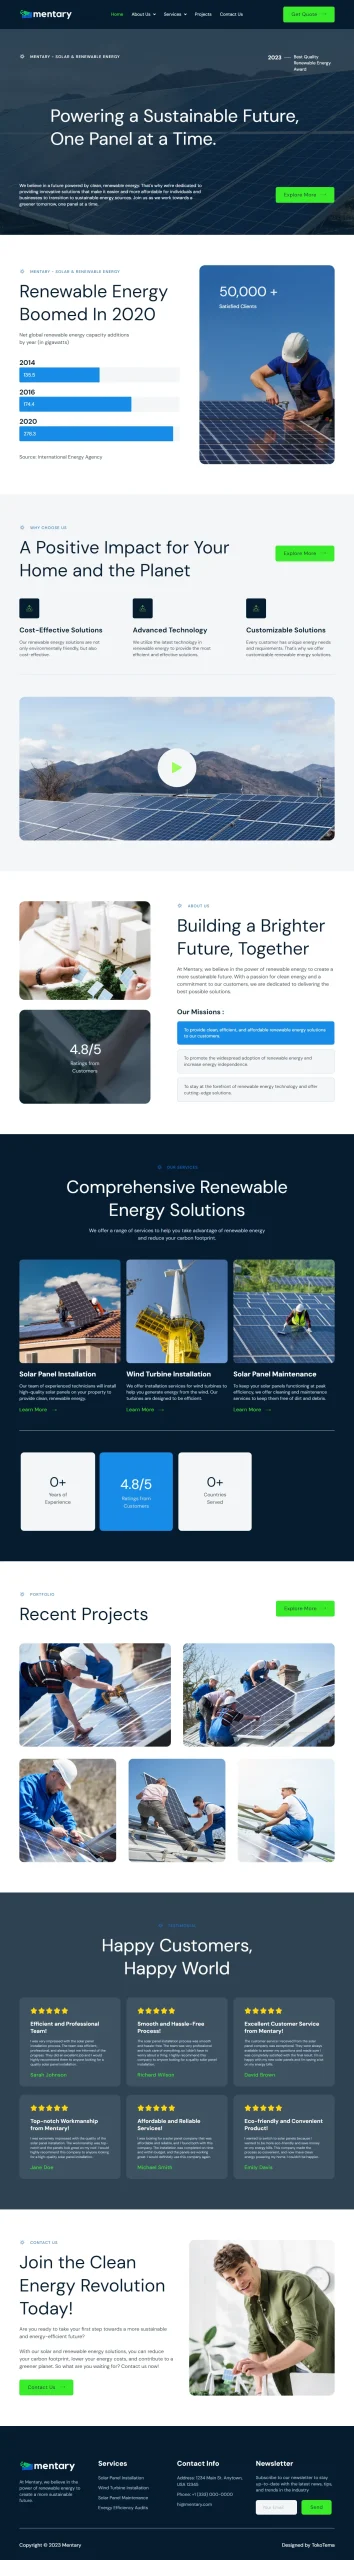 Mentary solar panel renewable energy